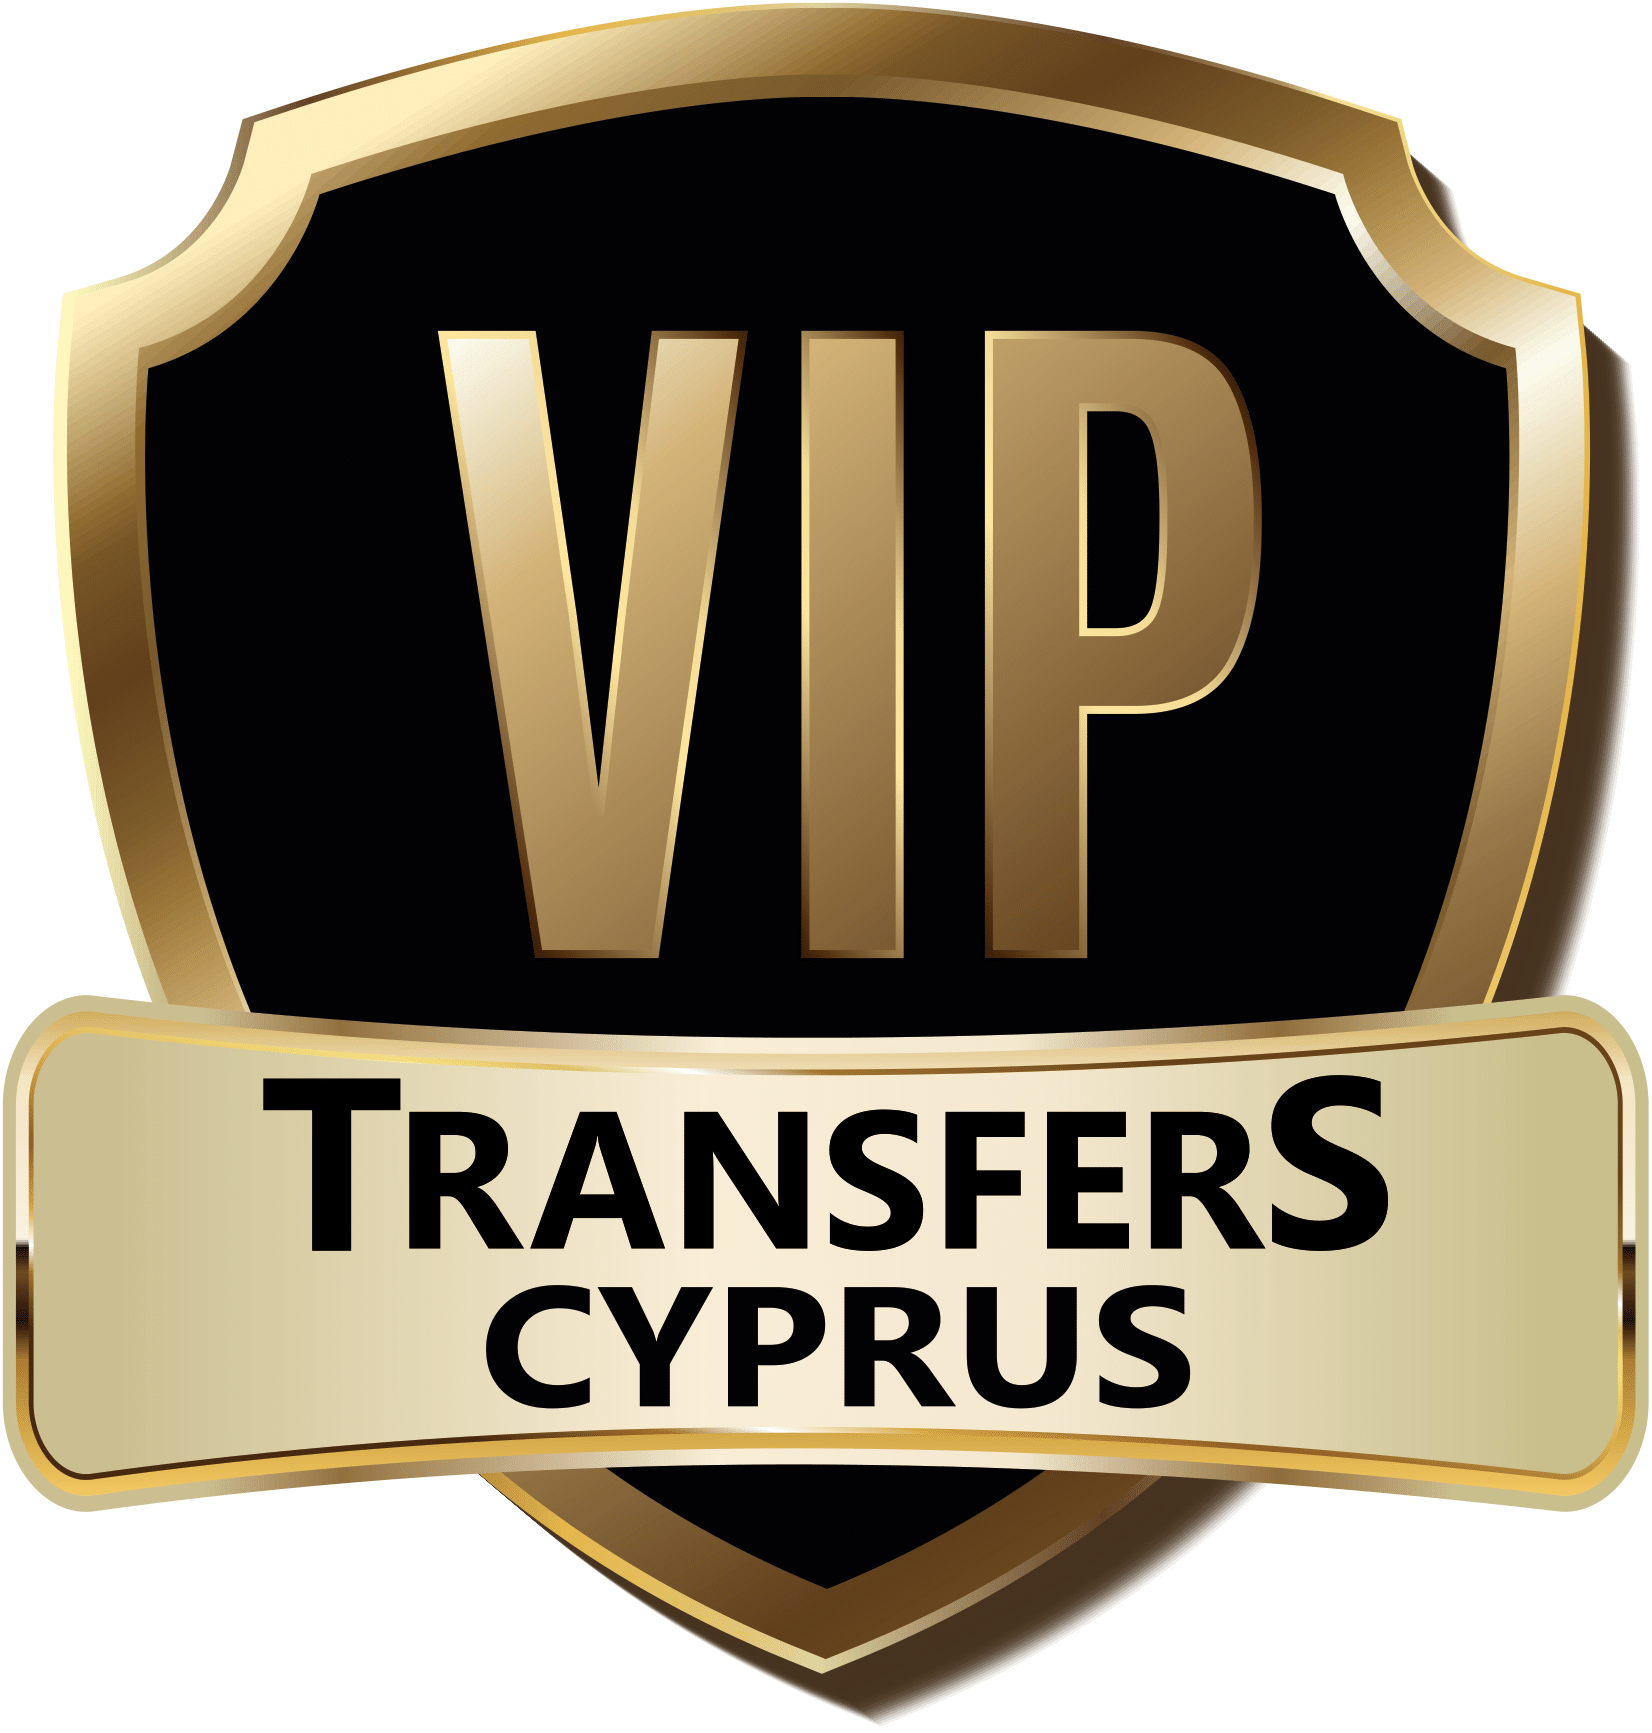 VIP Transfers Cyprus | Hello world - VIP Transfers Cyprus